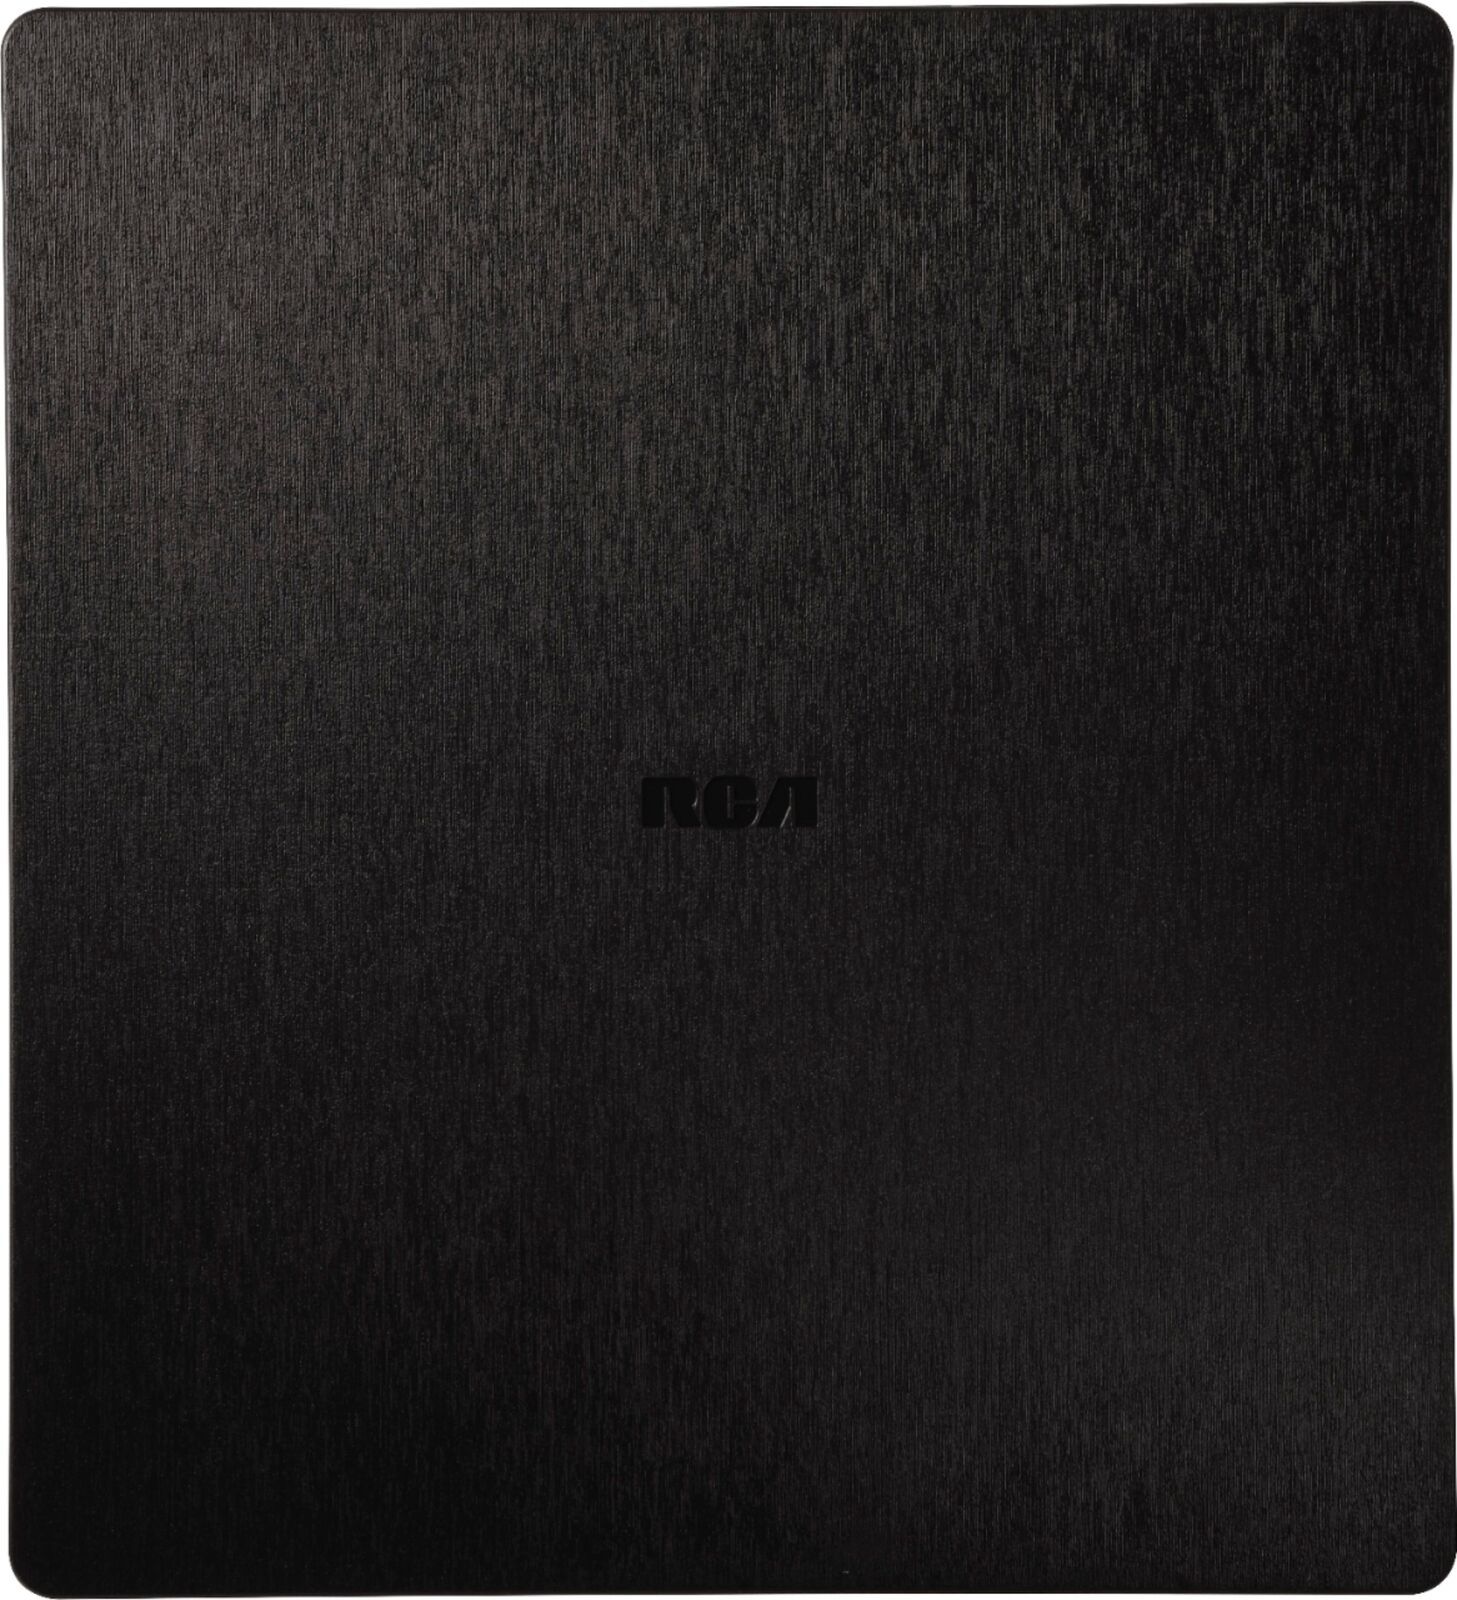 RCA - Indoor Flat Amplified HDTV Antenna - Black - $75.99